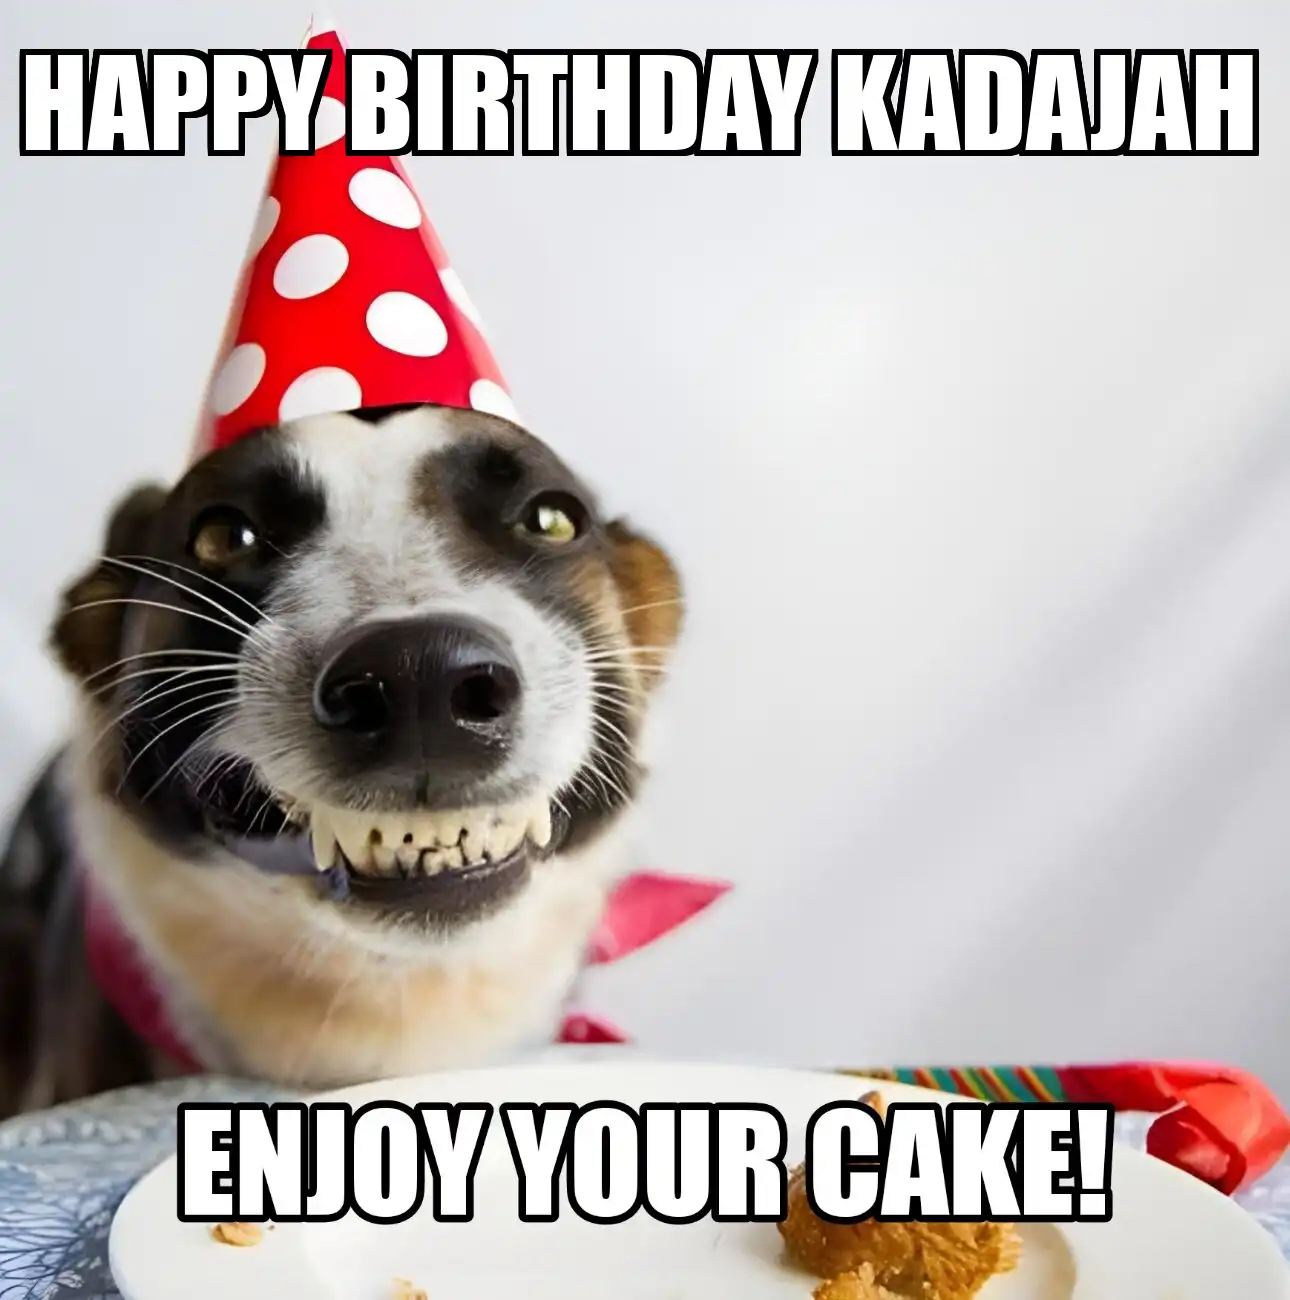 Happy Birthday Kadajah Enjoy Your Cake Dog Meme